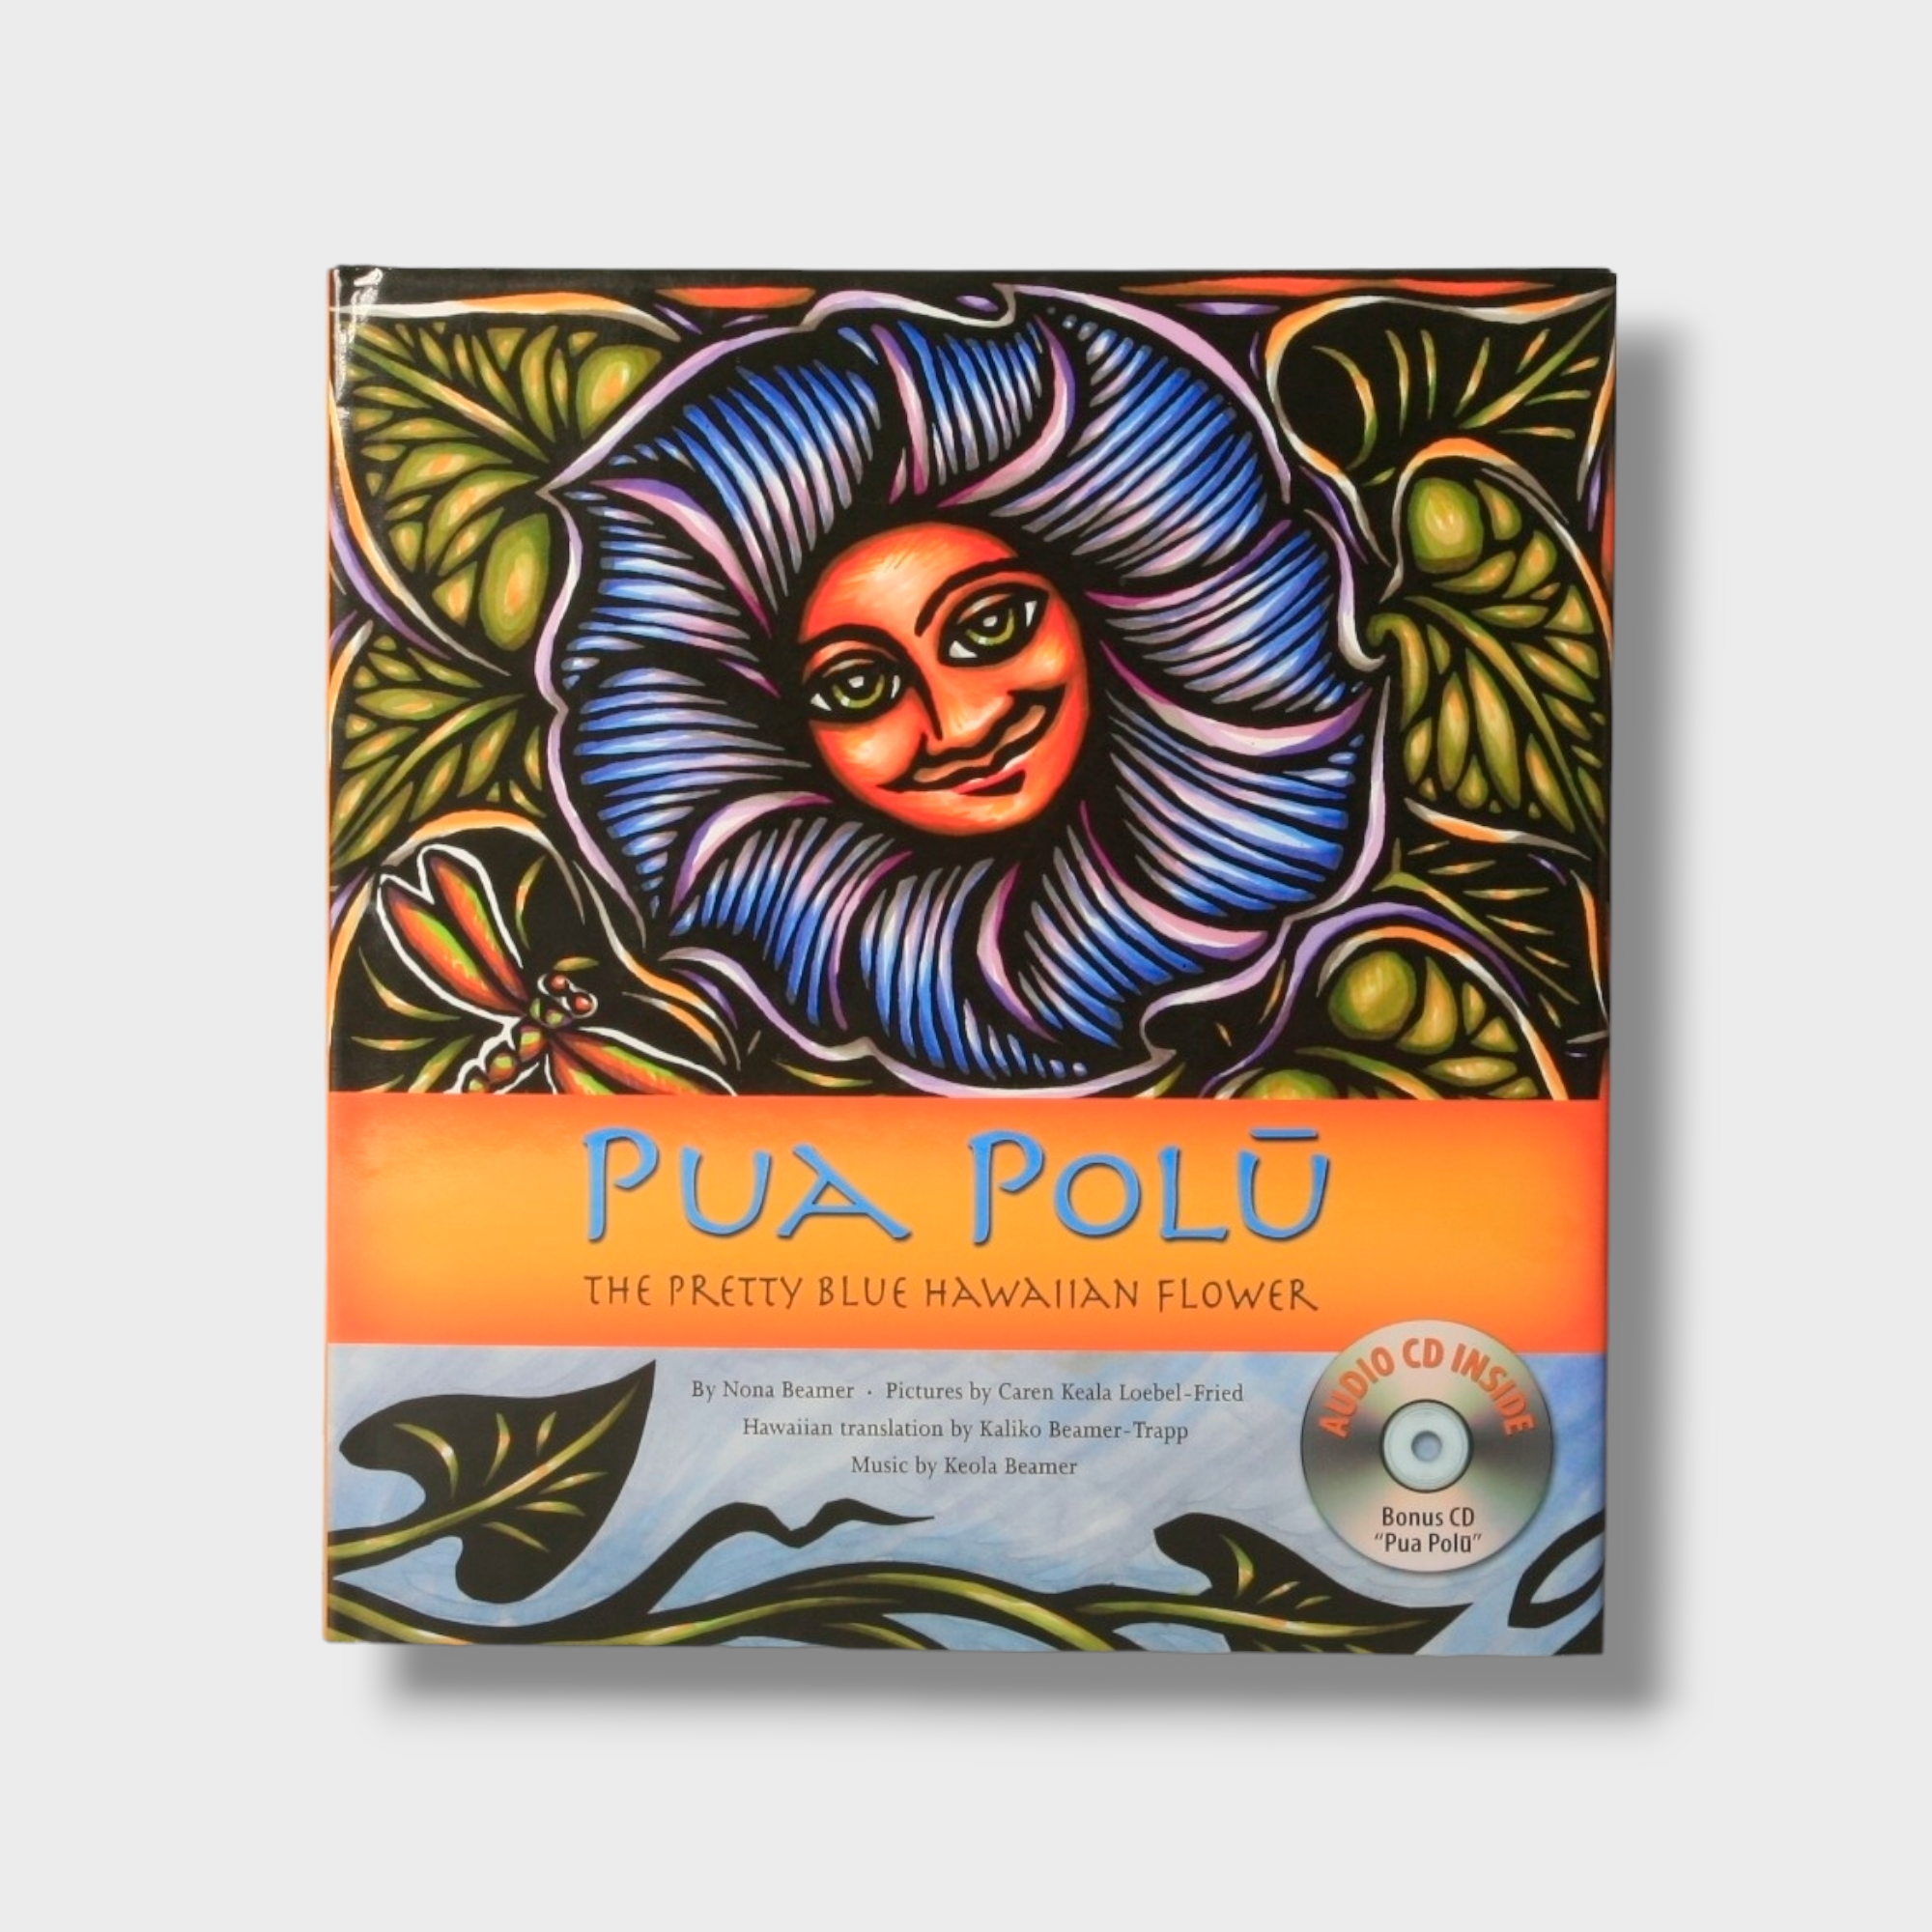 Pua Polū, the Pretty Blue Hawaiian Flower